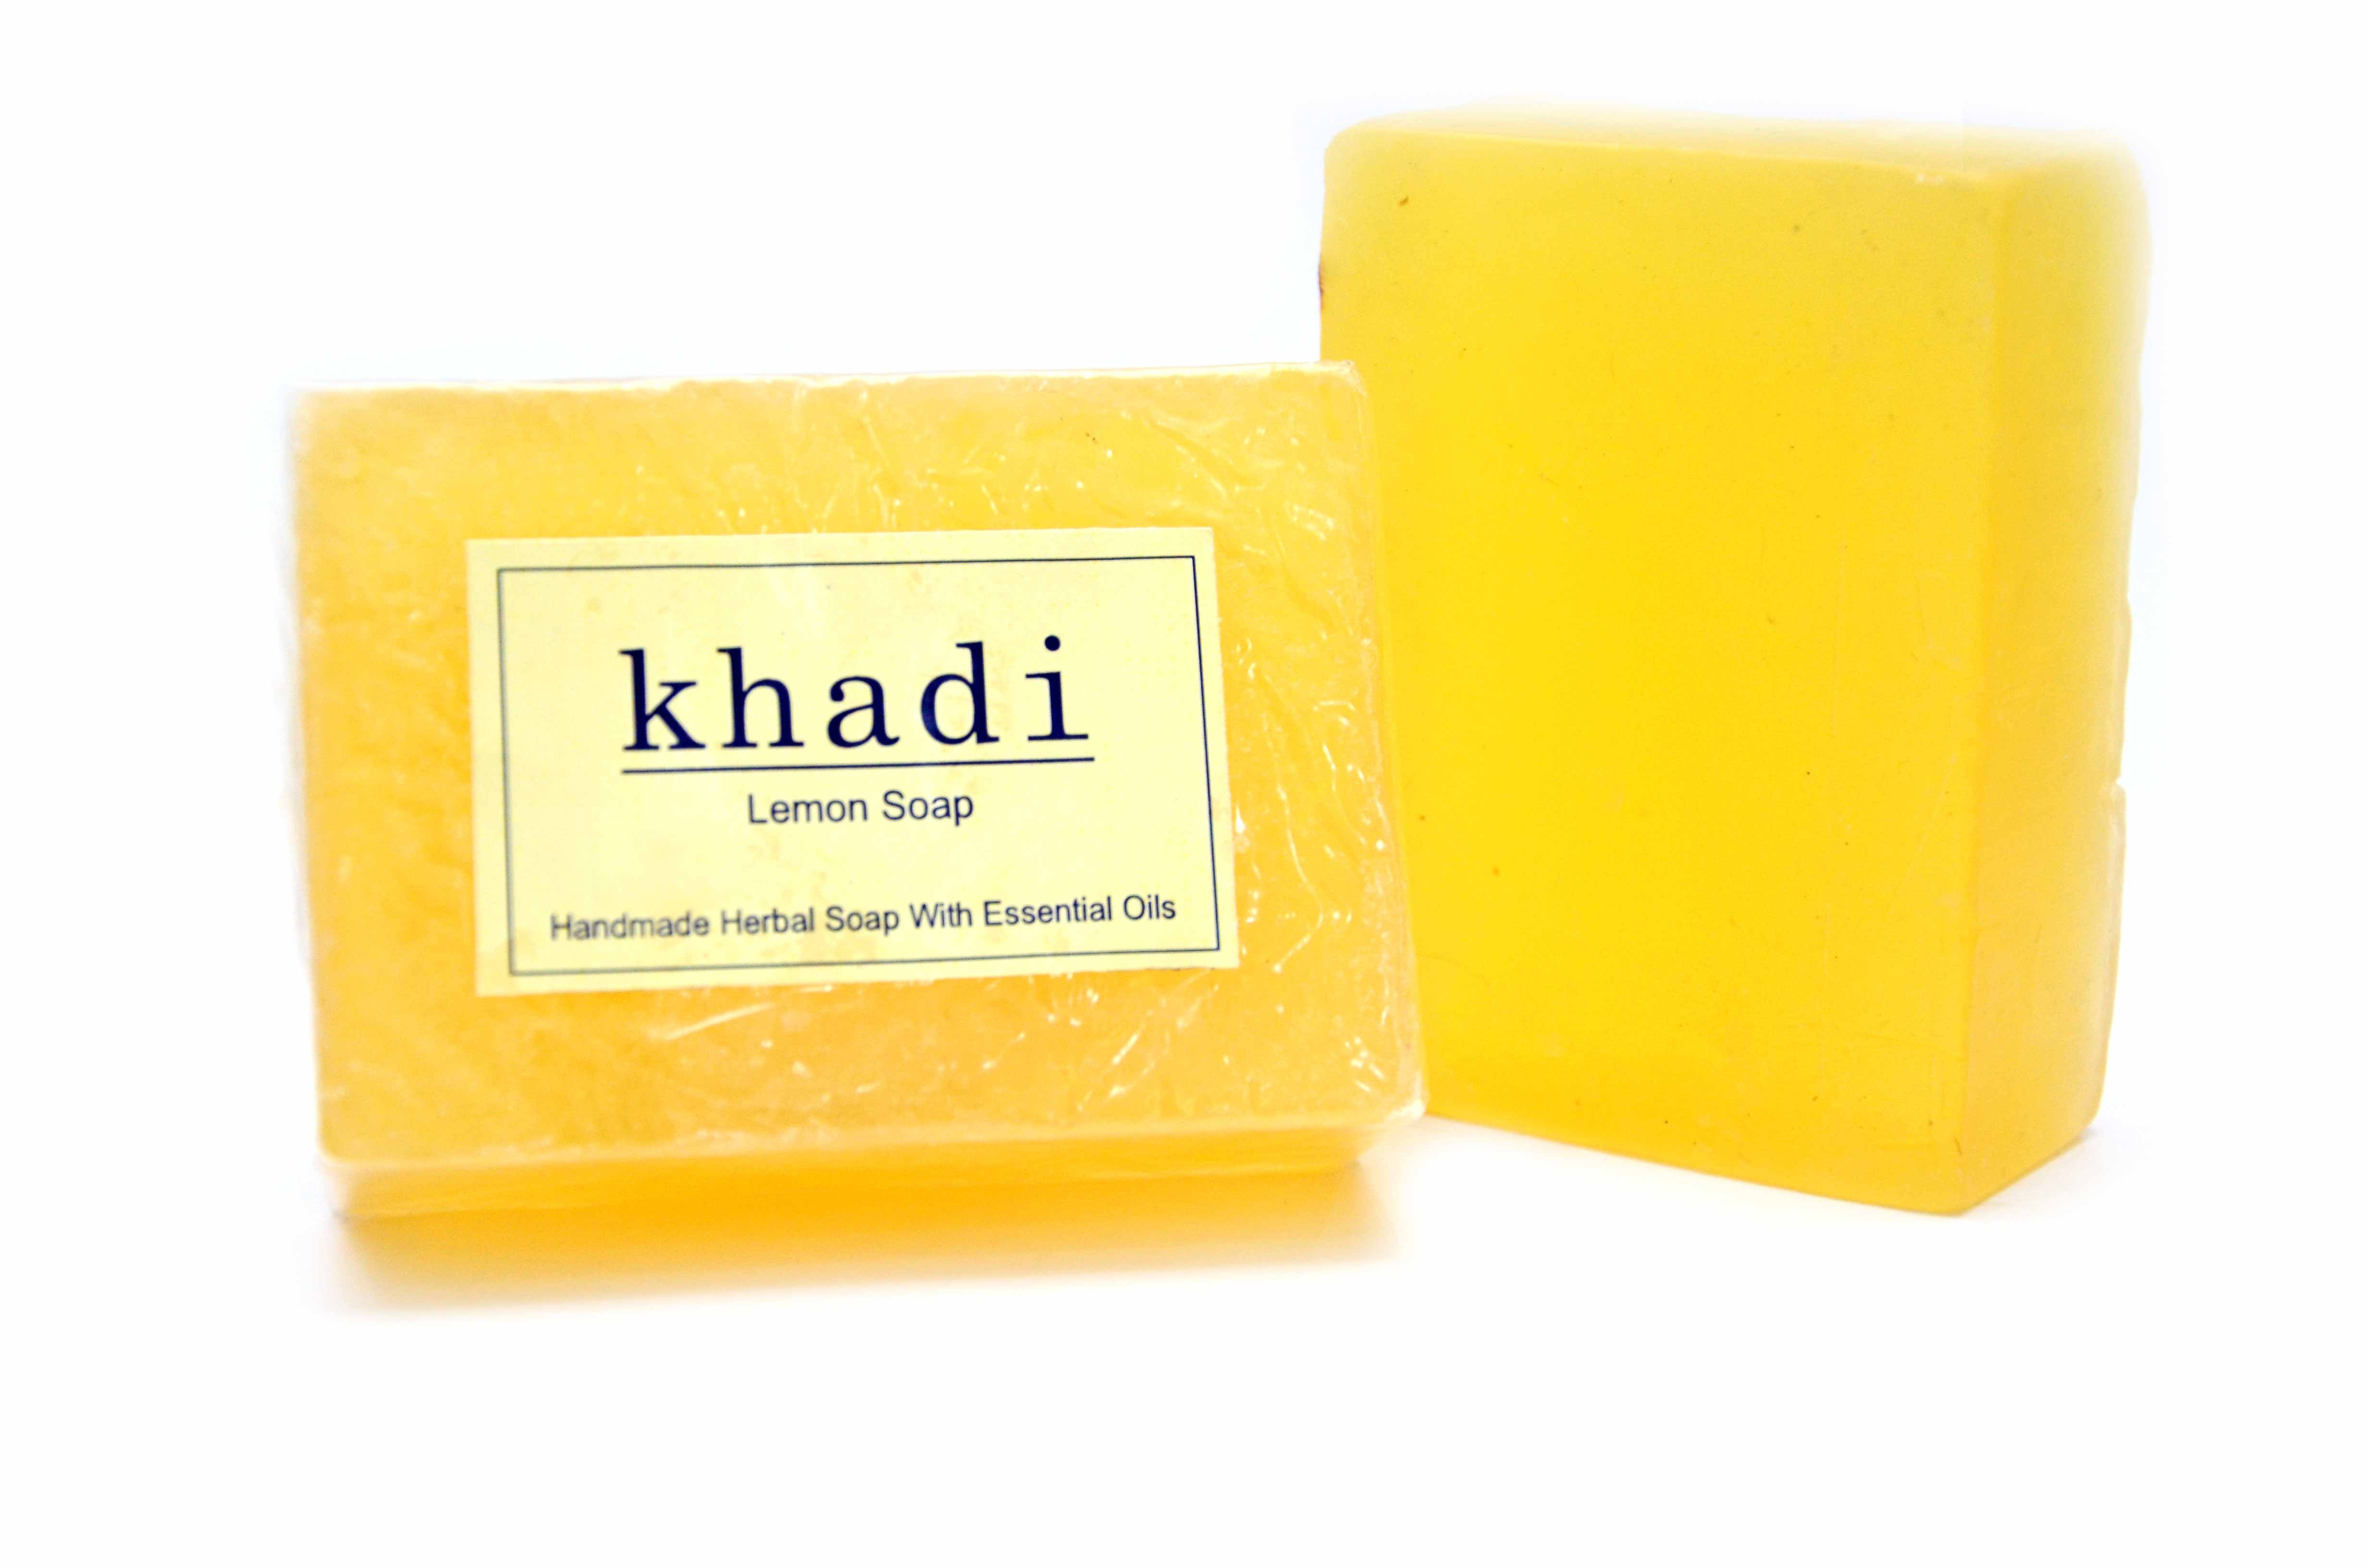 Buy Vagad's Khadi Lemon Soap at Best Price Online